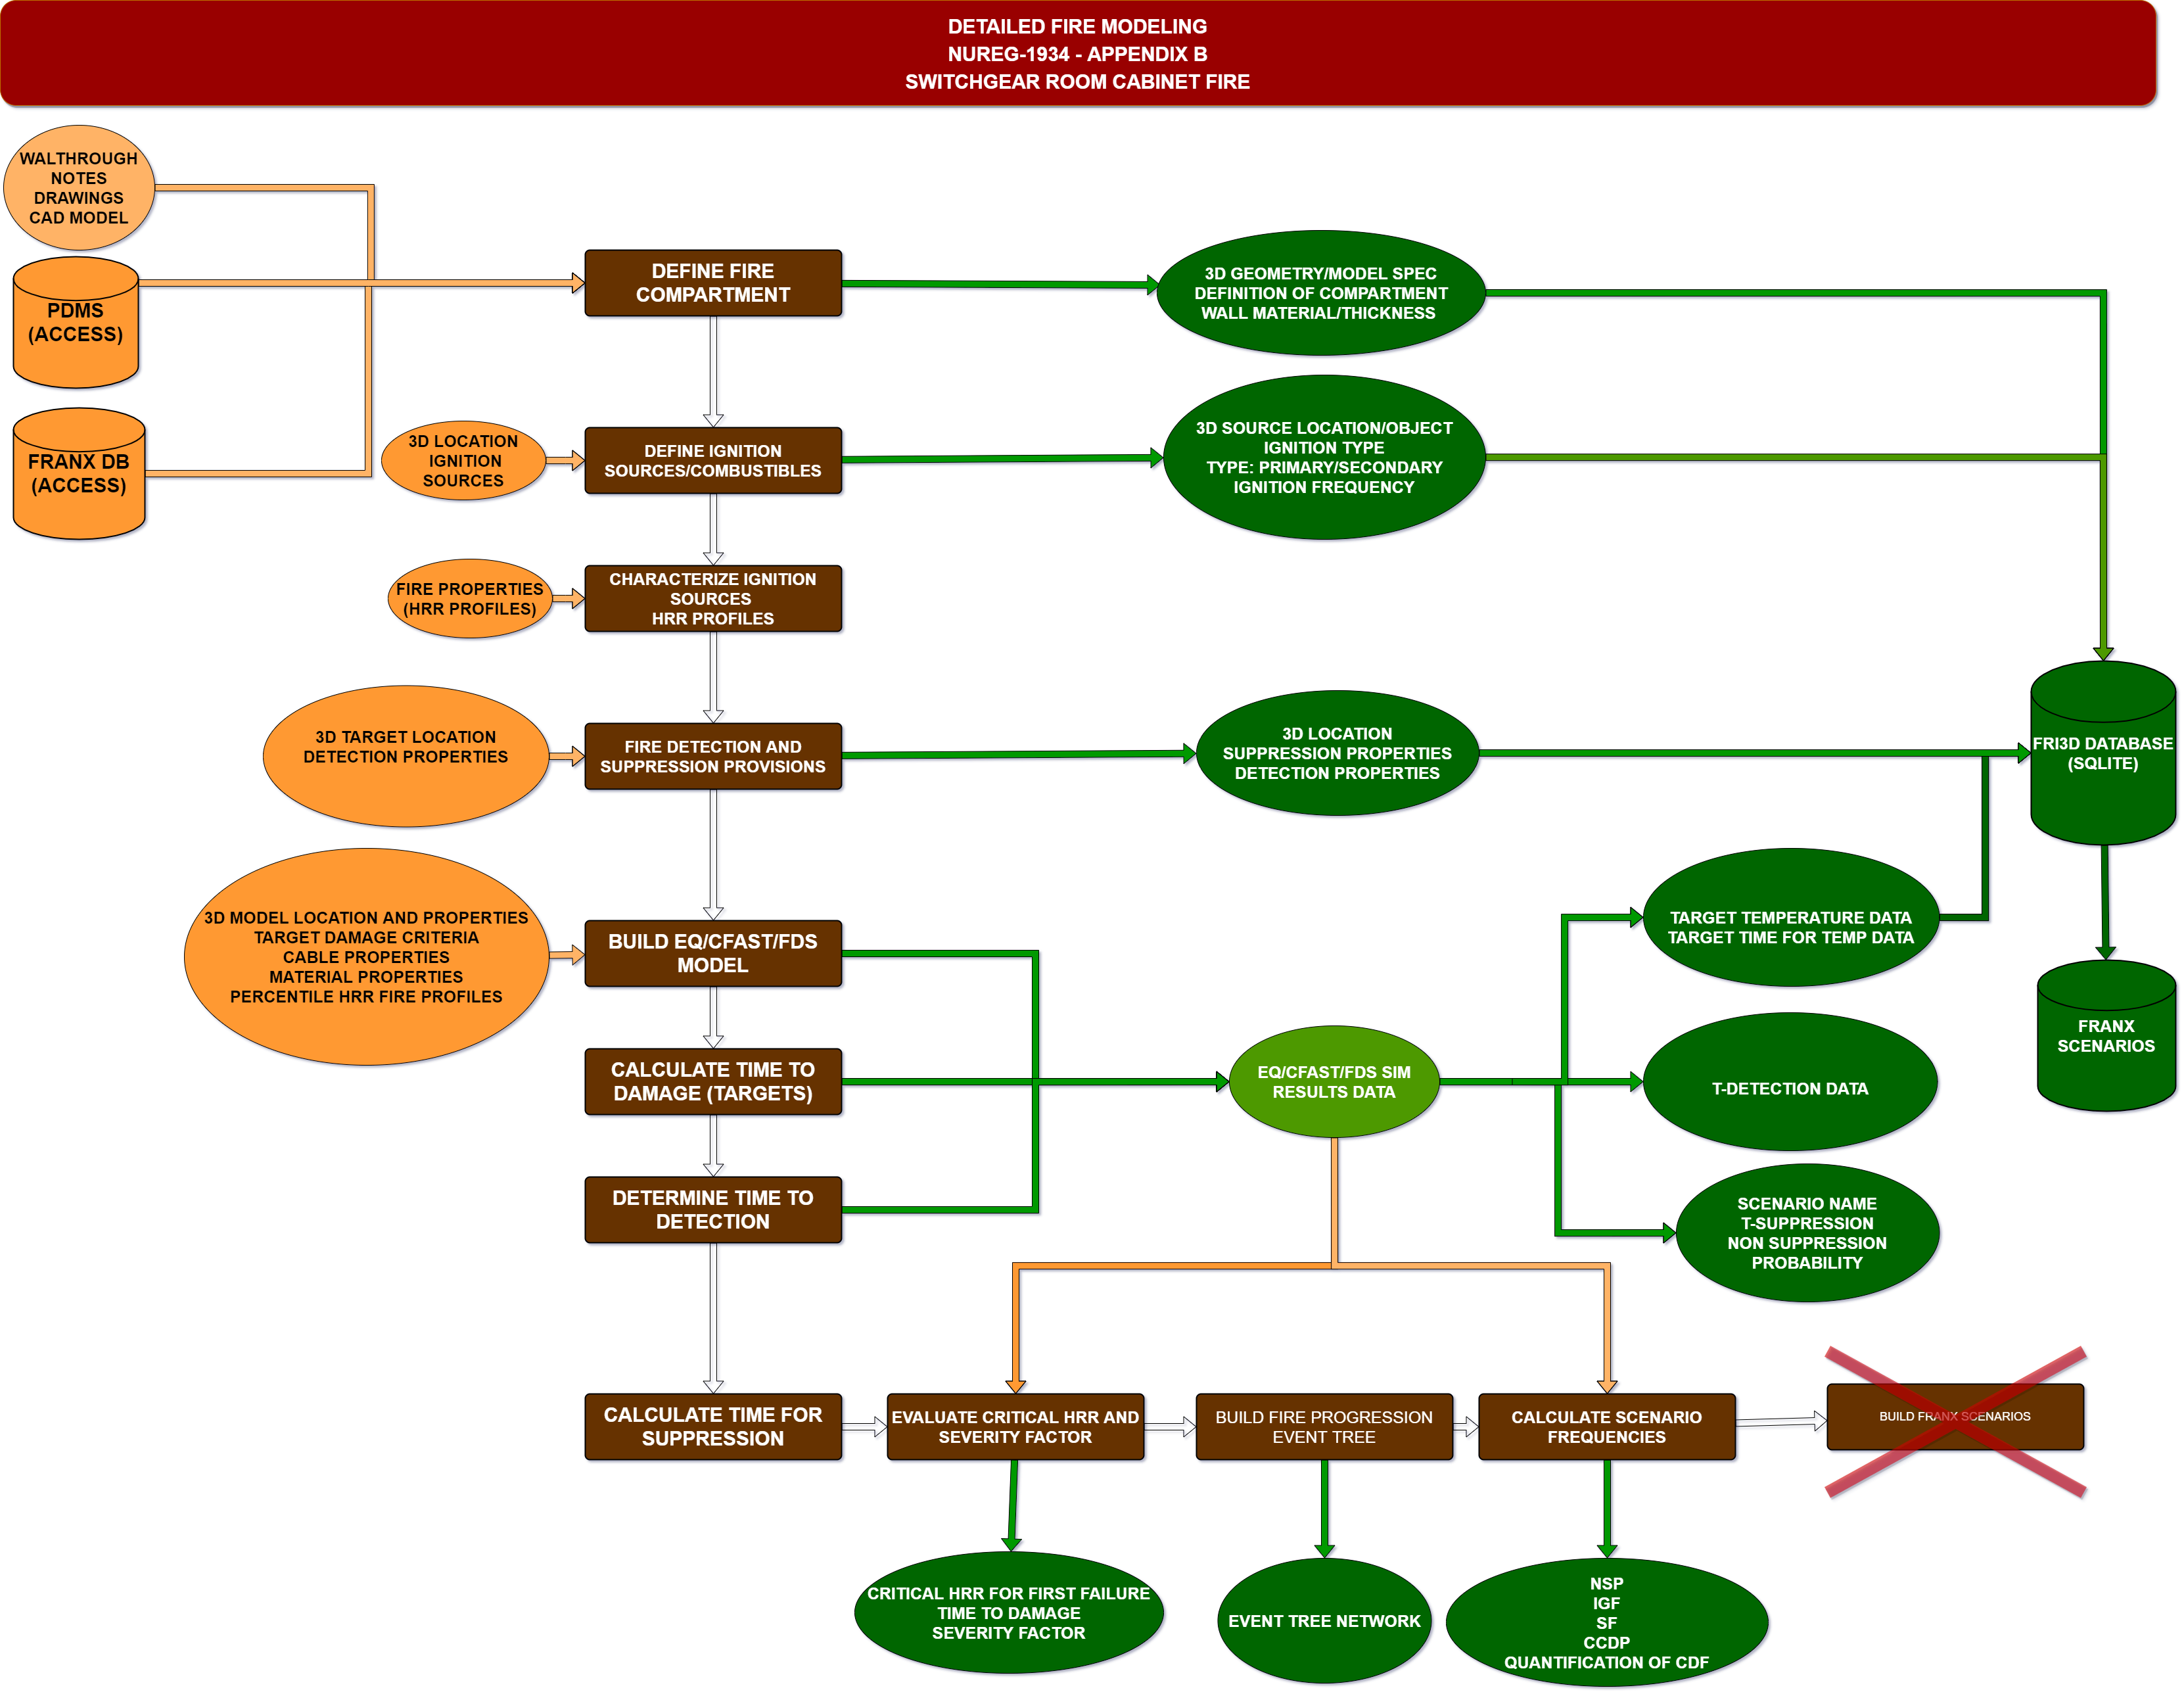 FRI3D Detailed Fire Modeling Workflow